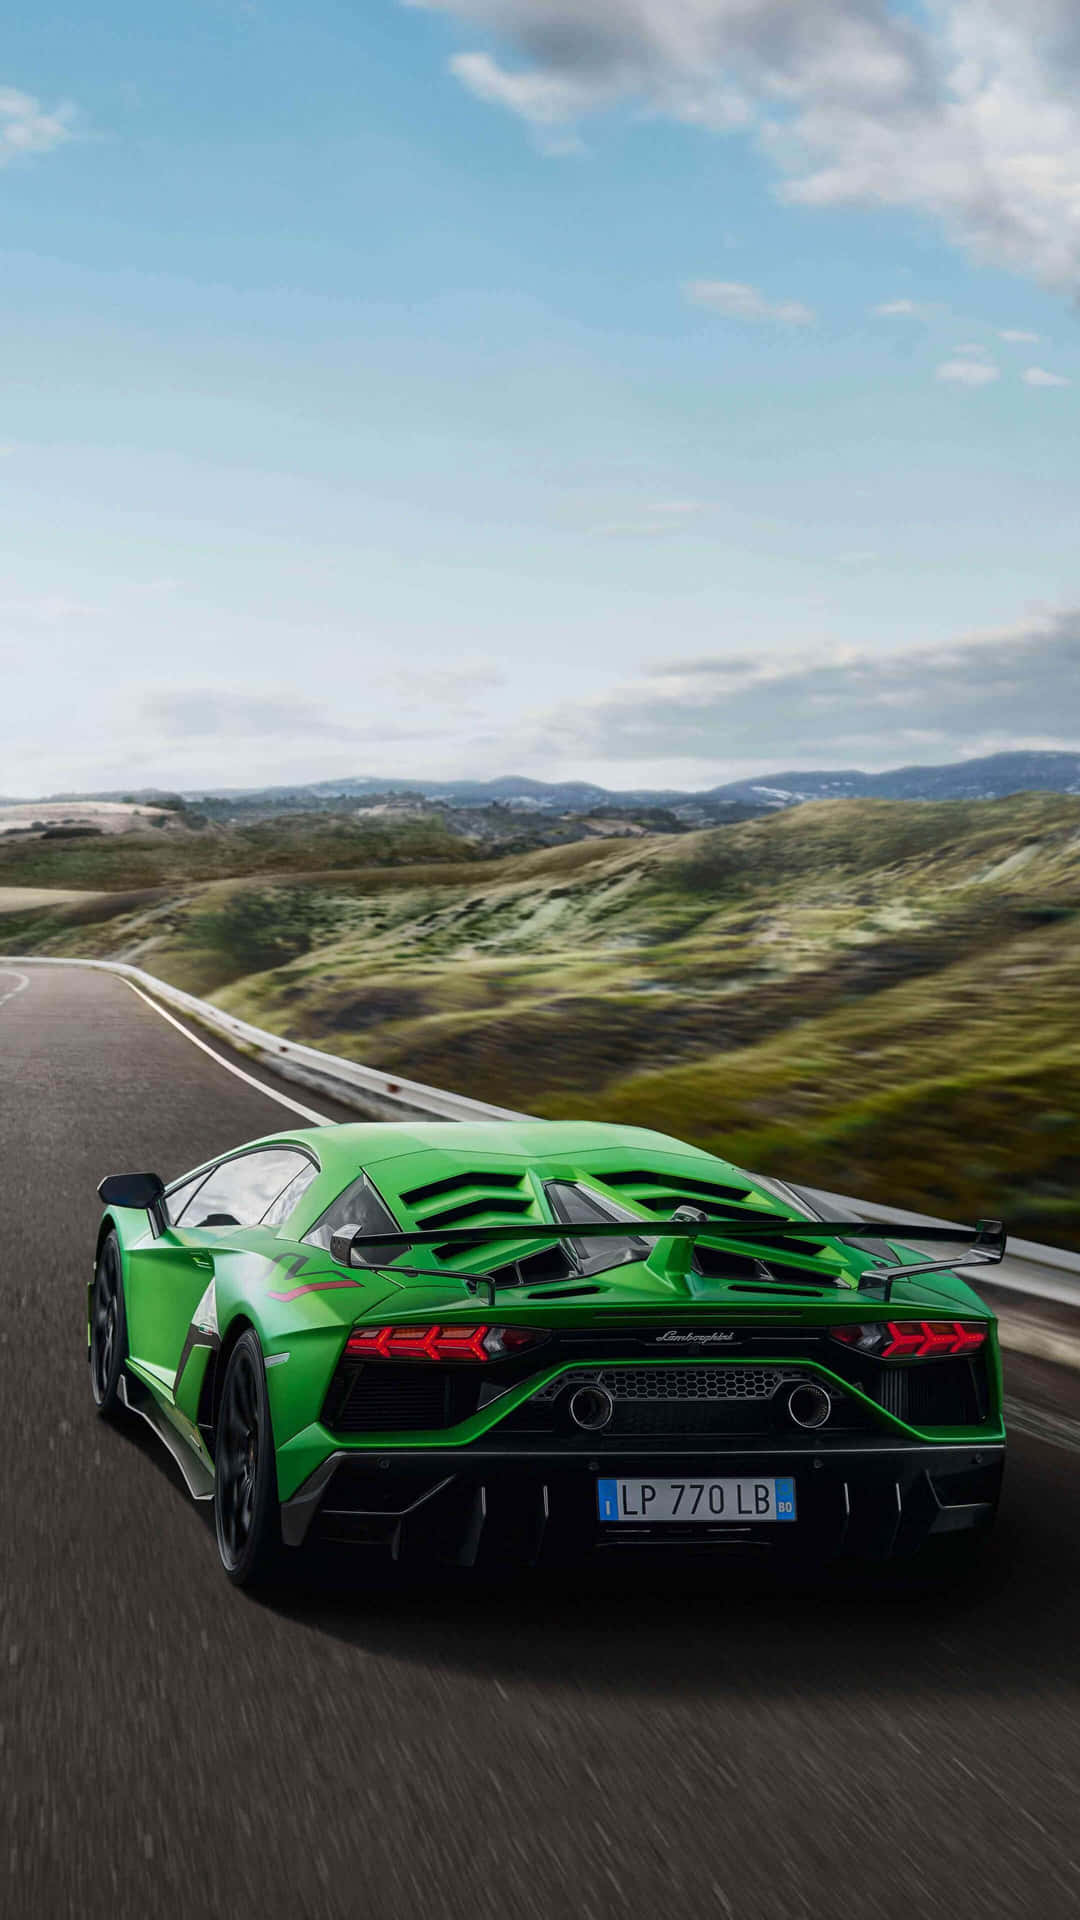 Enjoy the luxury of a Lamborghini in green Wallpaper